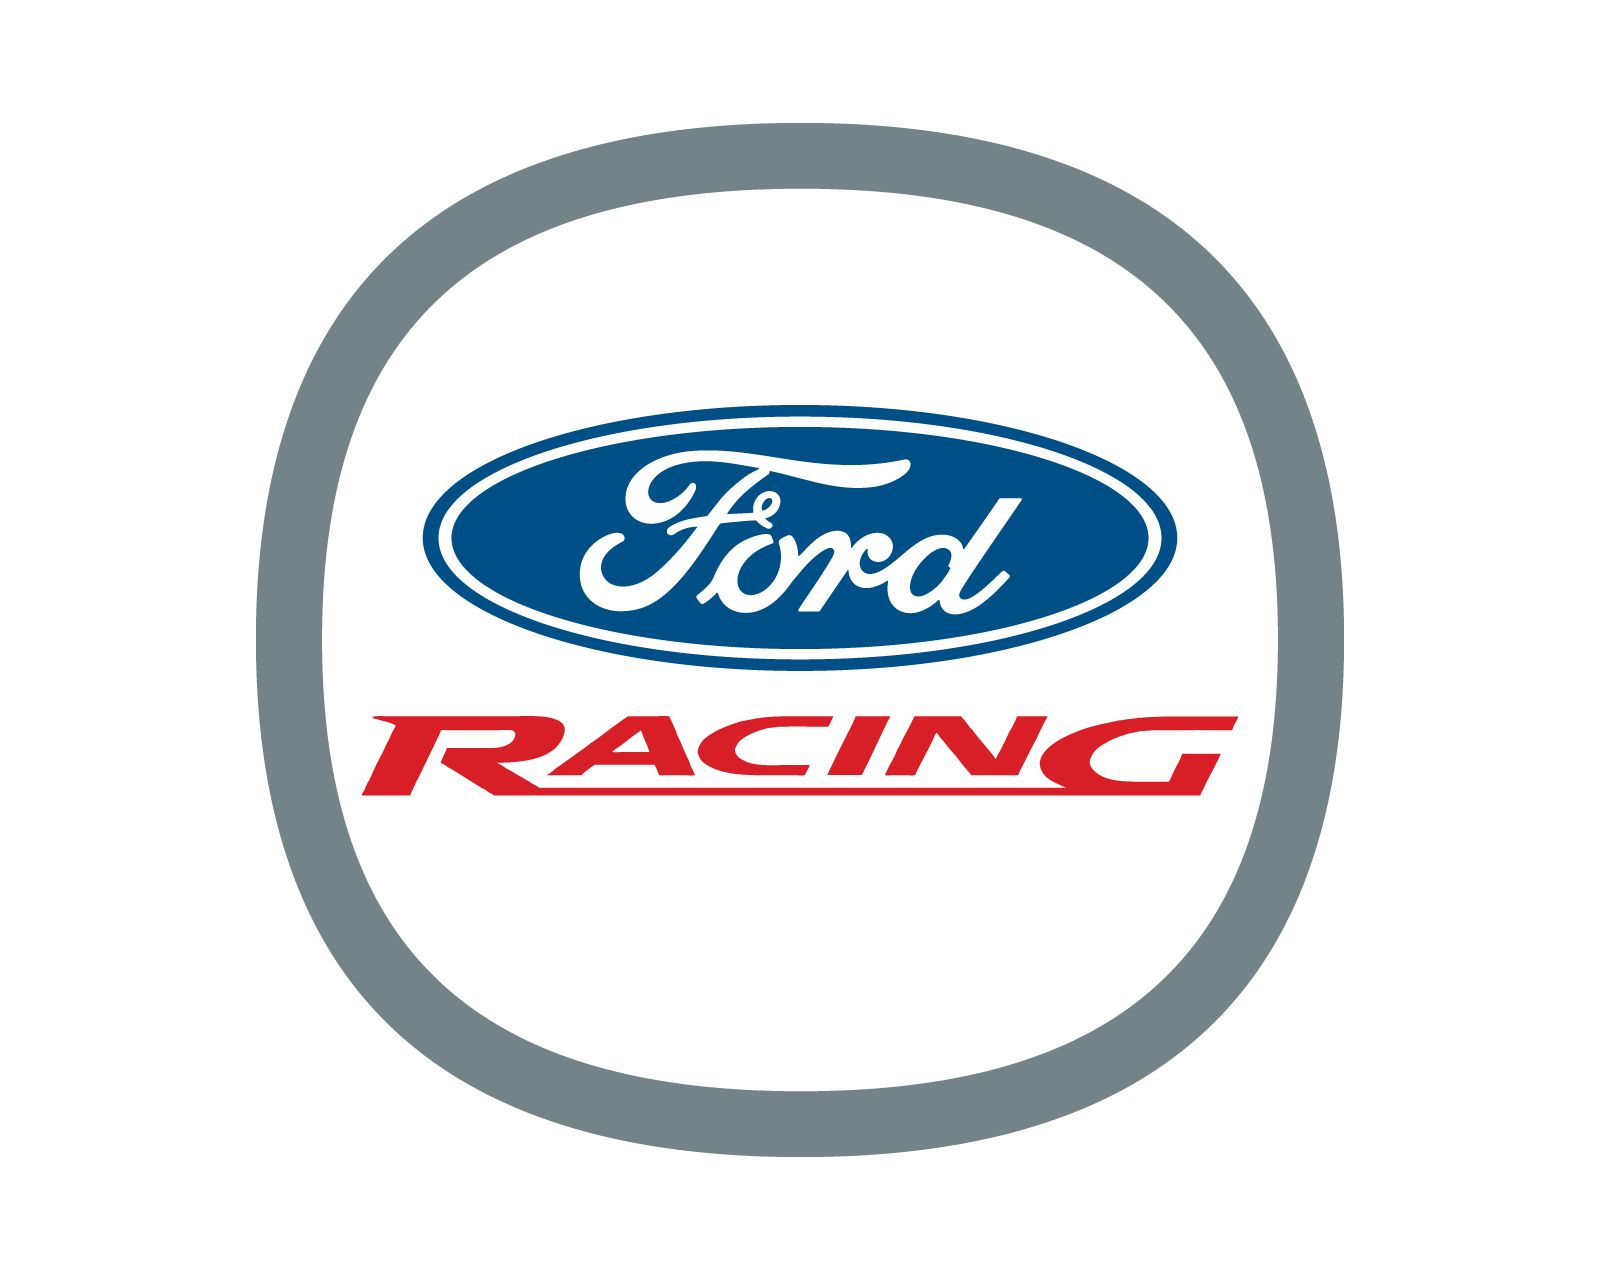 Cool Ford Racing Logos - image